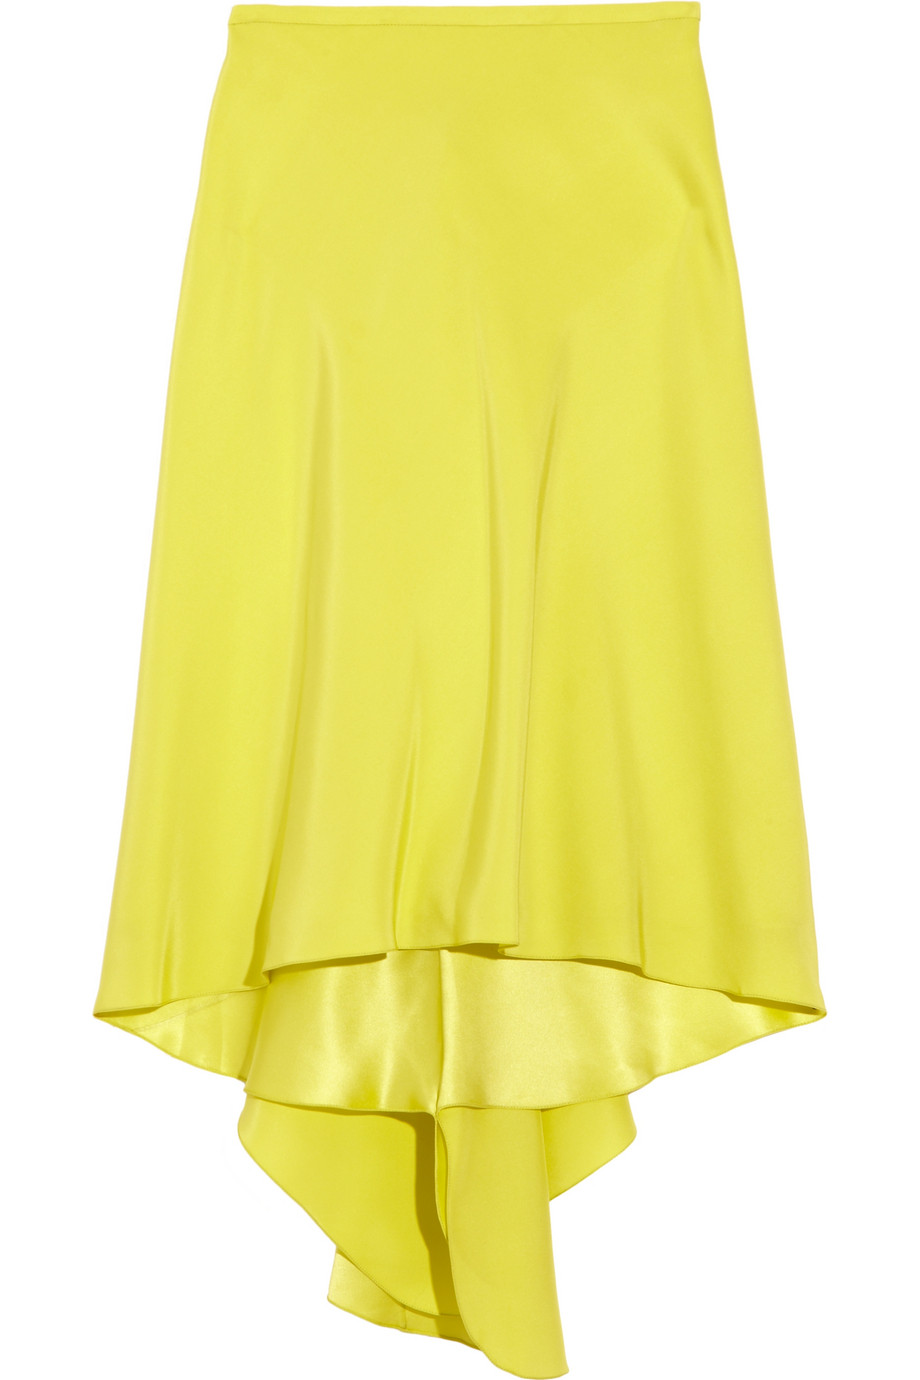 Lyst - Jason Wu Ruffled-back Silk Skirt in Yellow